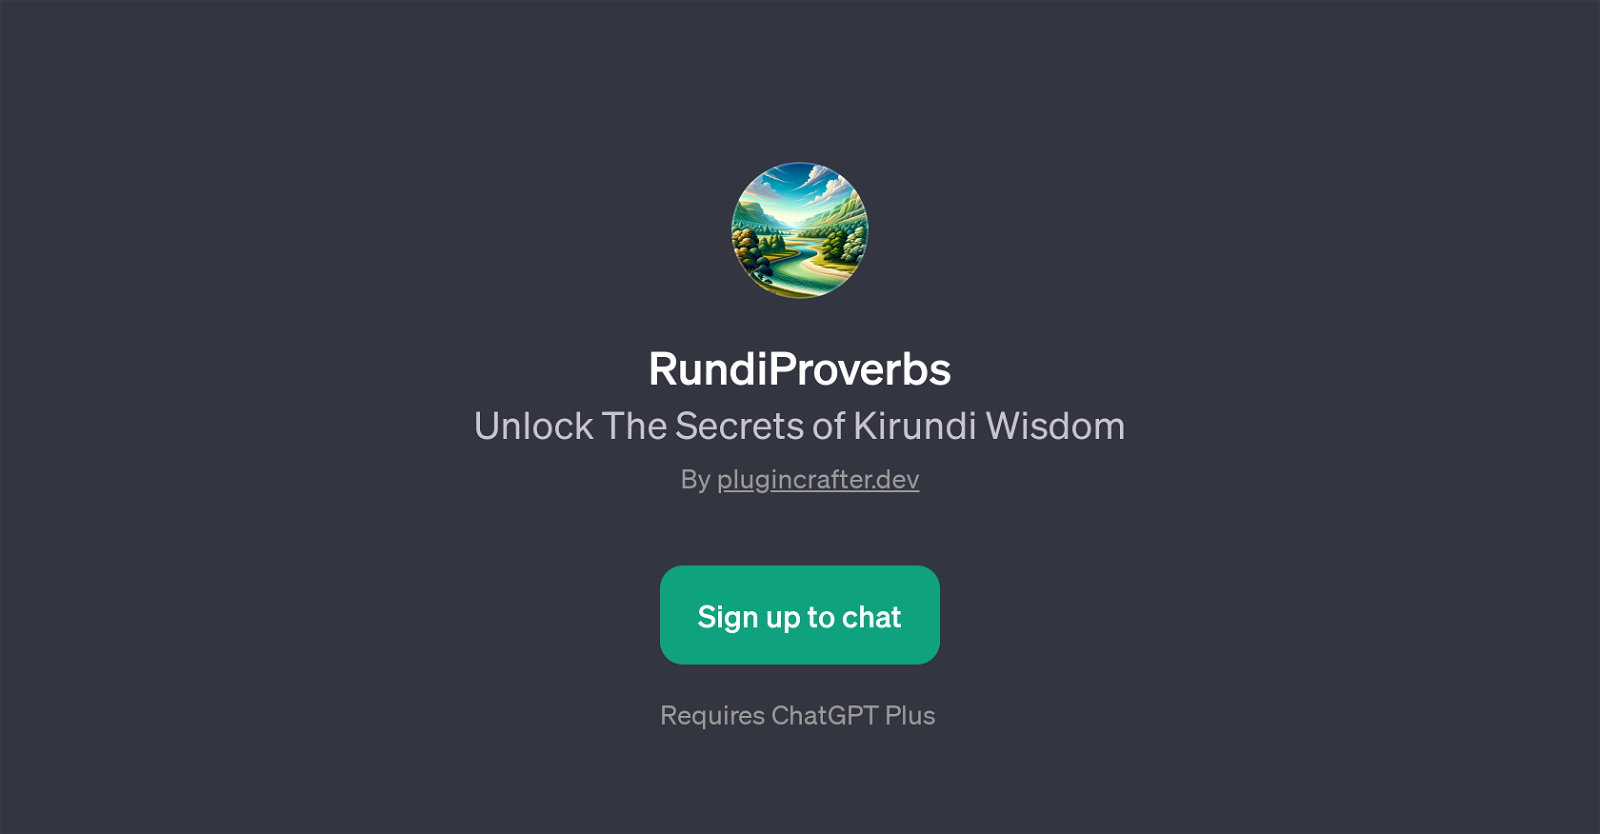 RundiProverbs website